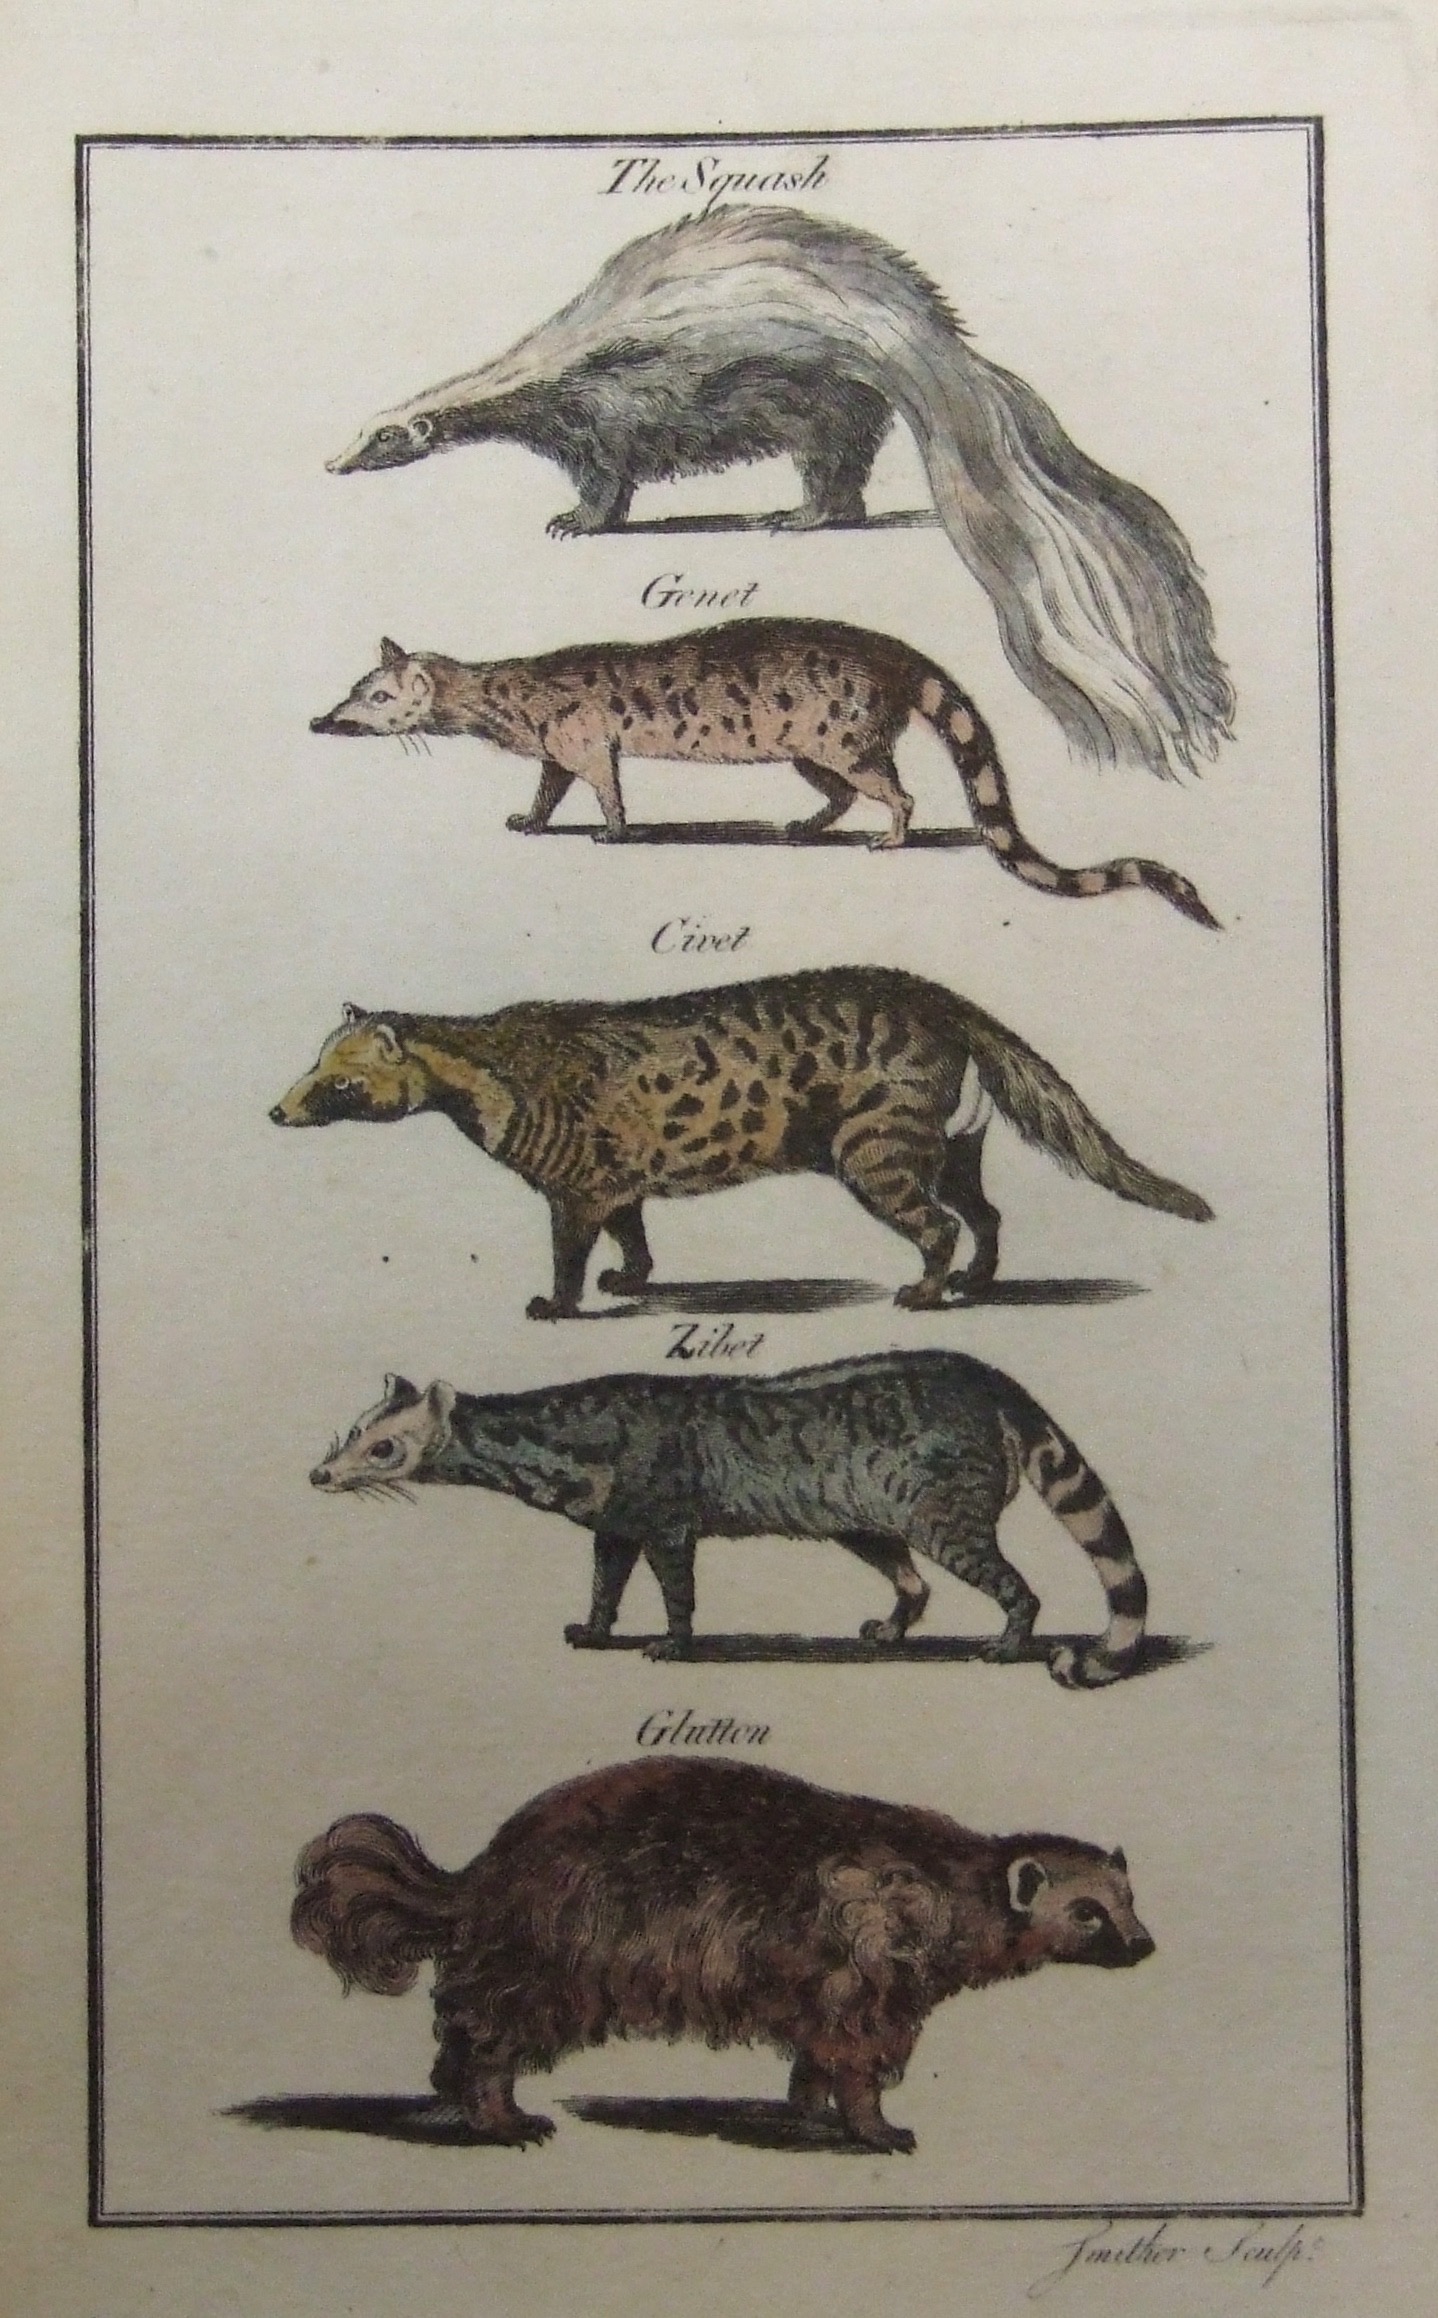 The Squash (Skunk), Genet, Civet, Zibet, Glutton